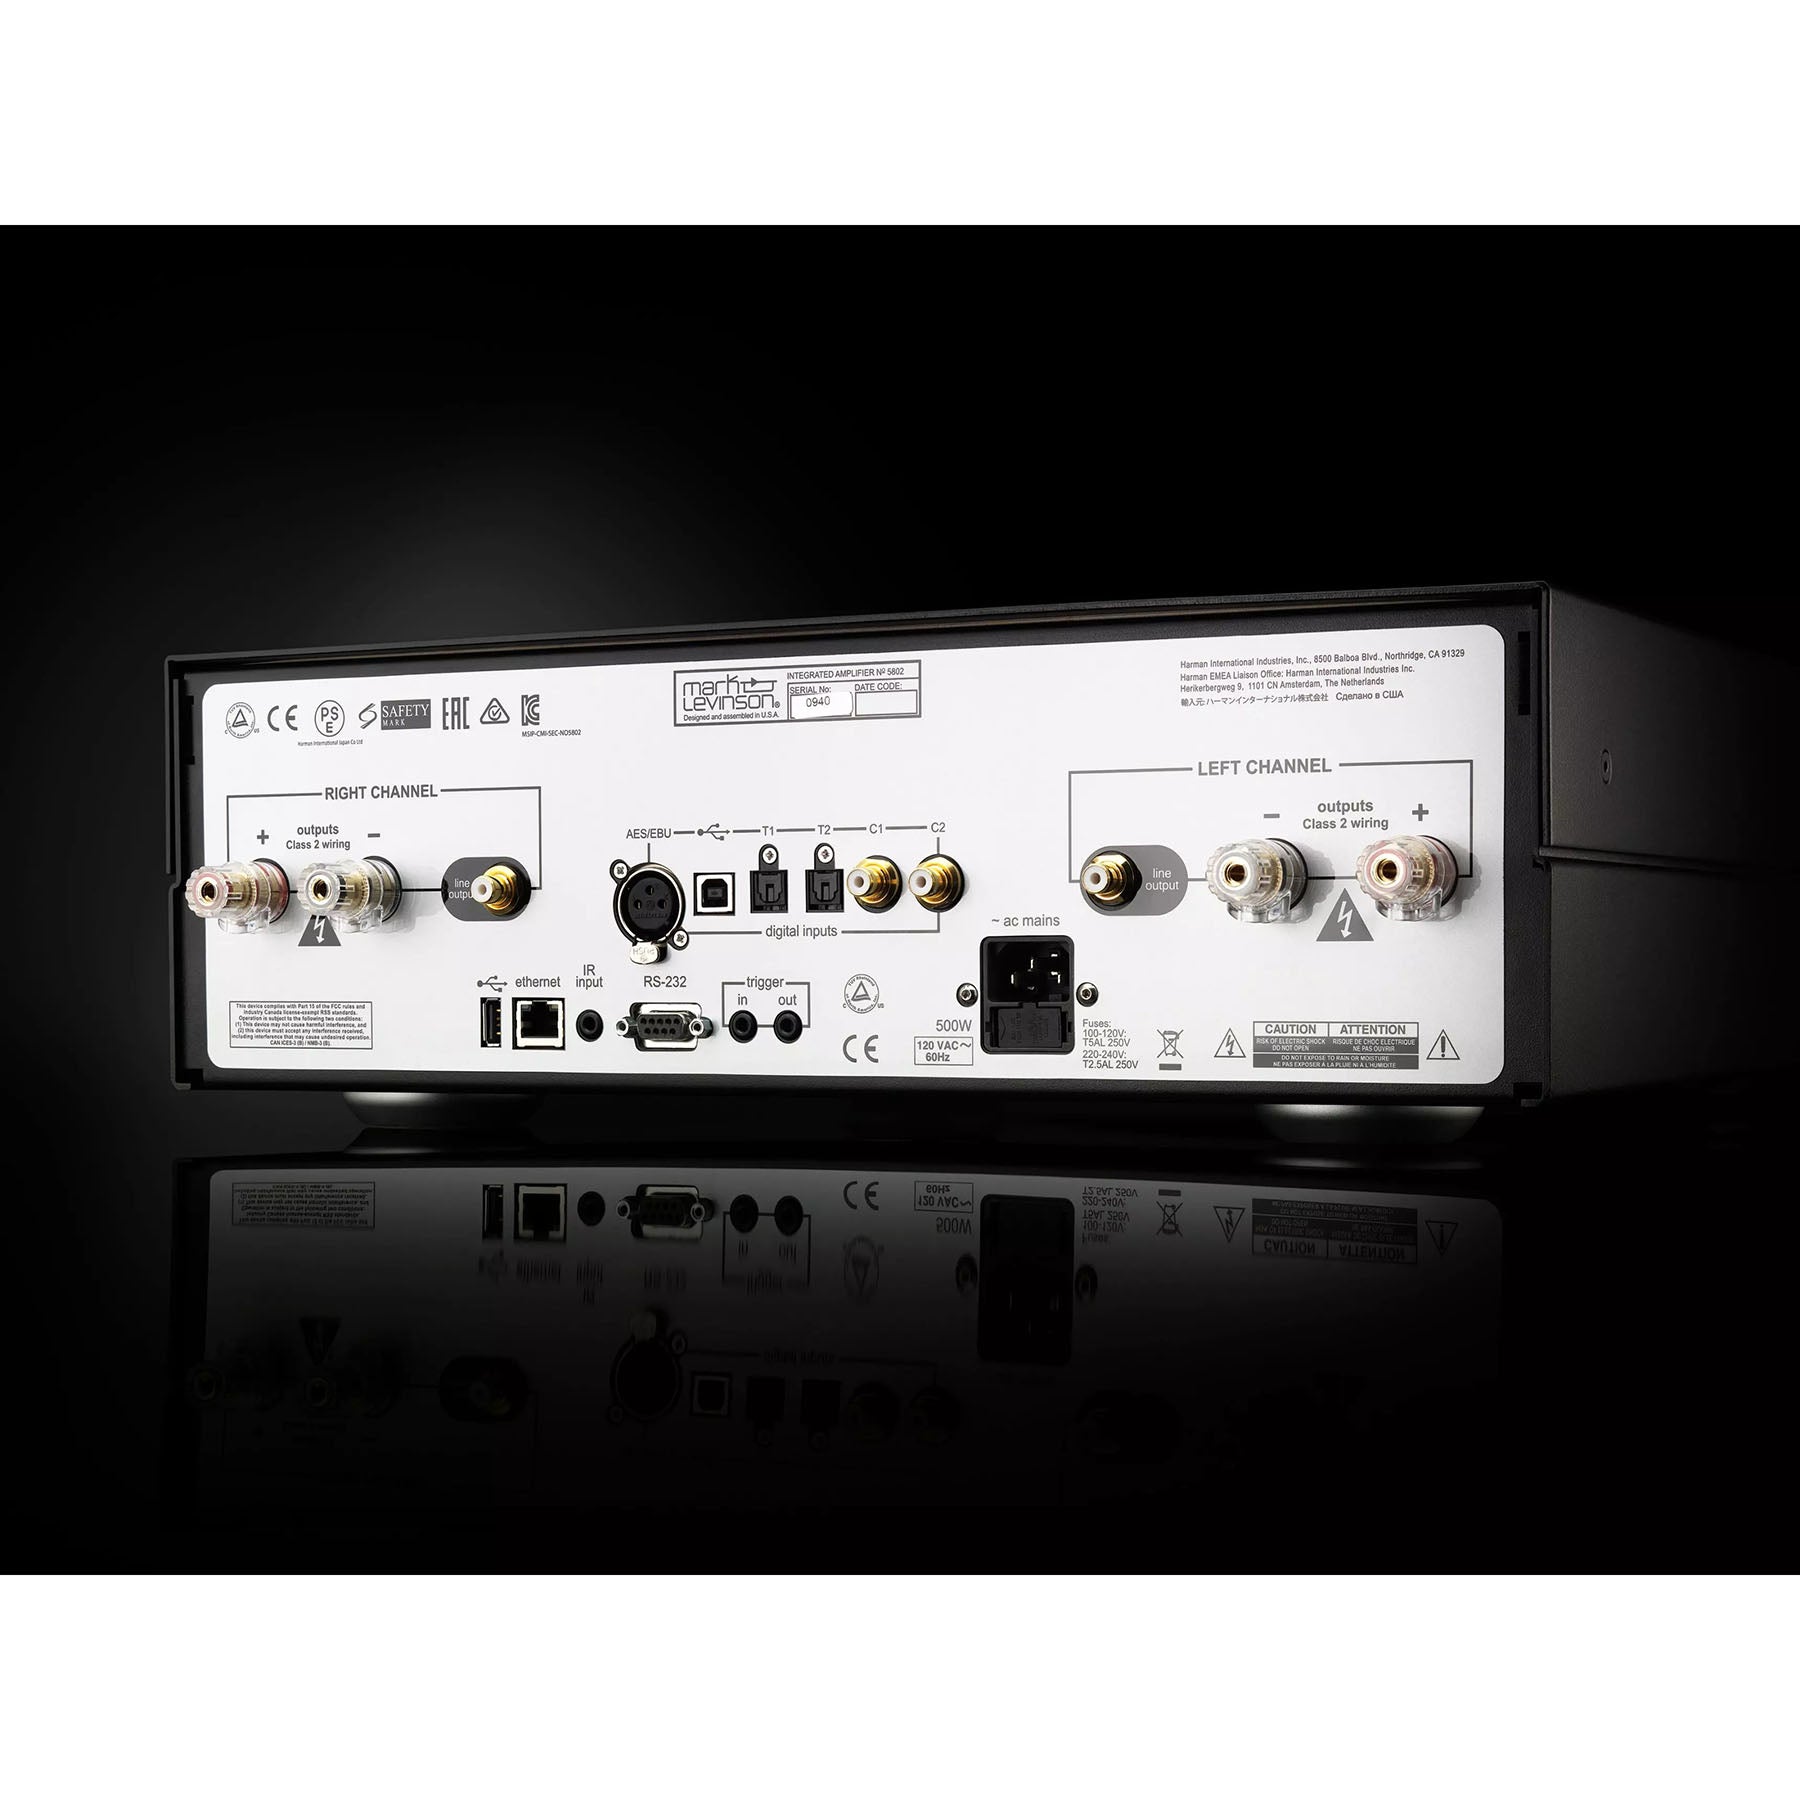 Mark Levinson No 5802 Integrated Amplifier for Digital Sources